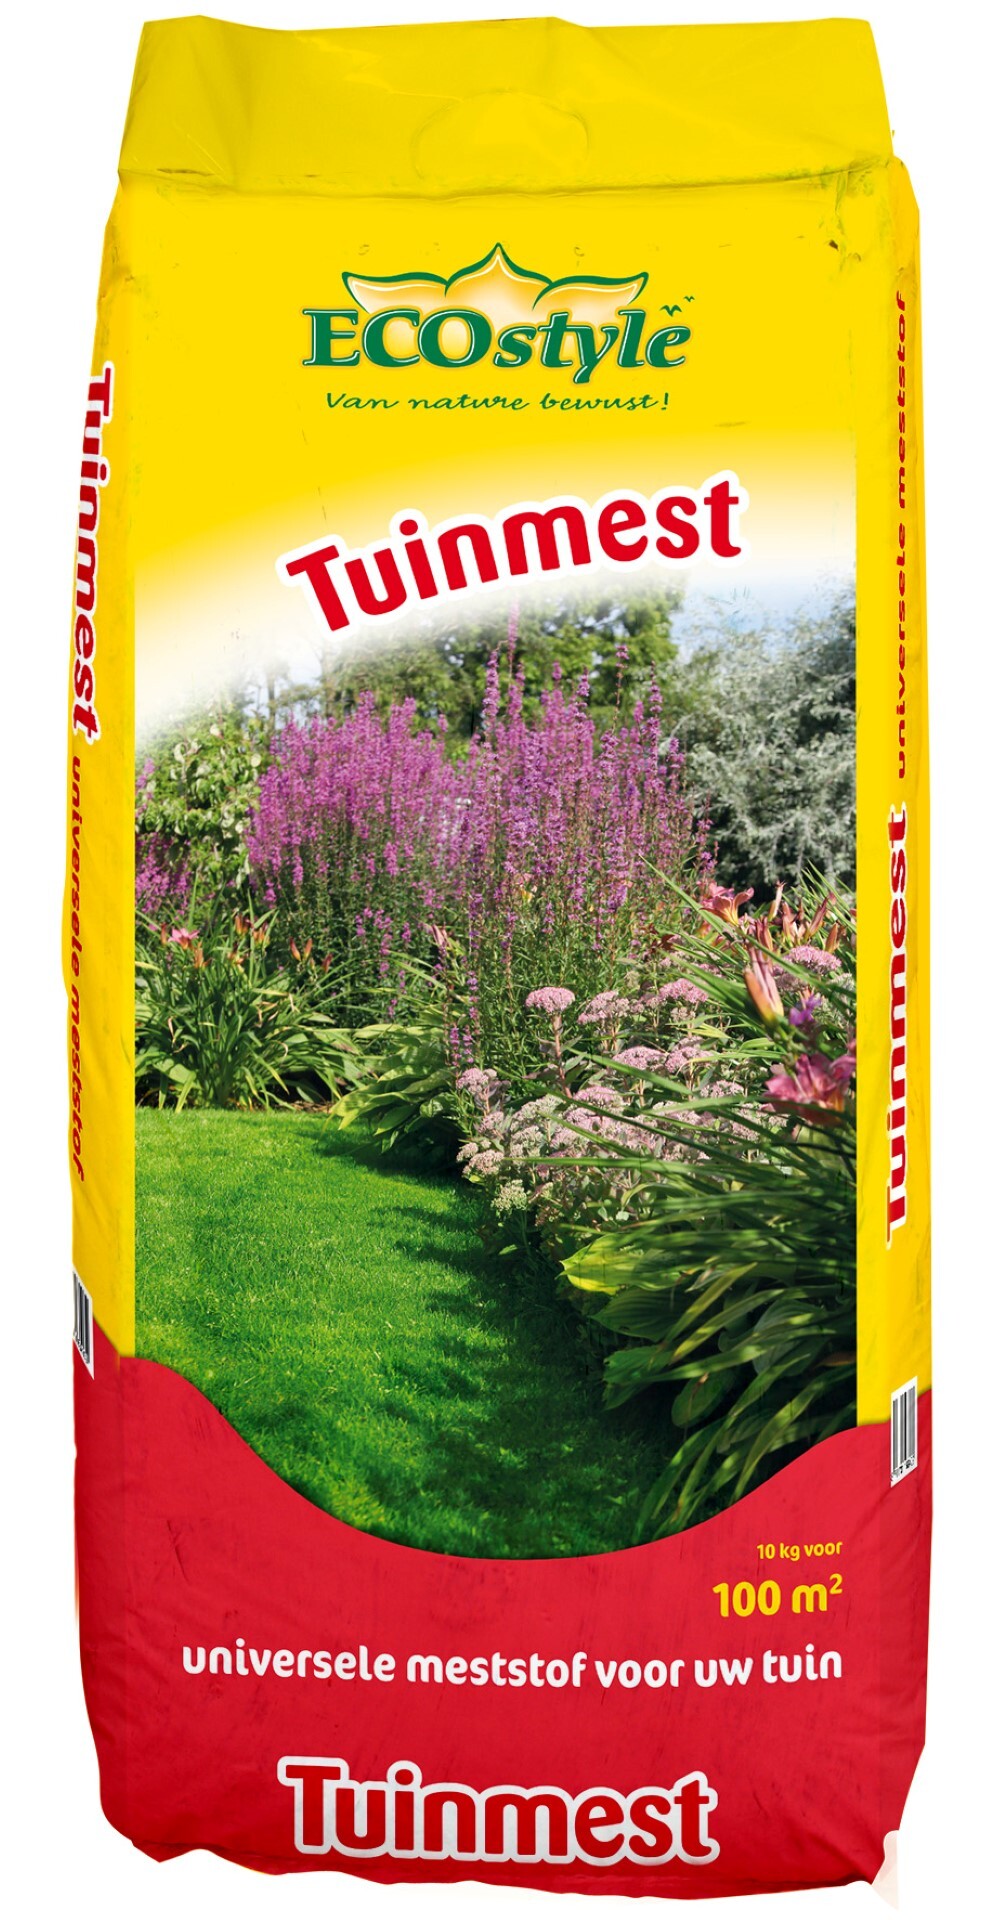 ECOSTYLE Tuinmest - 10 kg - algemene tuinmeststof voor 100 m2 100% organische basismest voor de gehele tuin